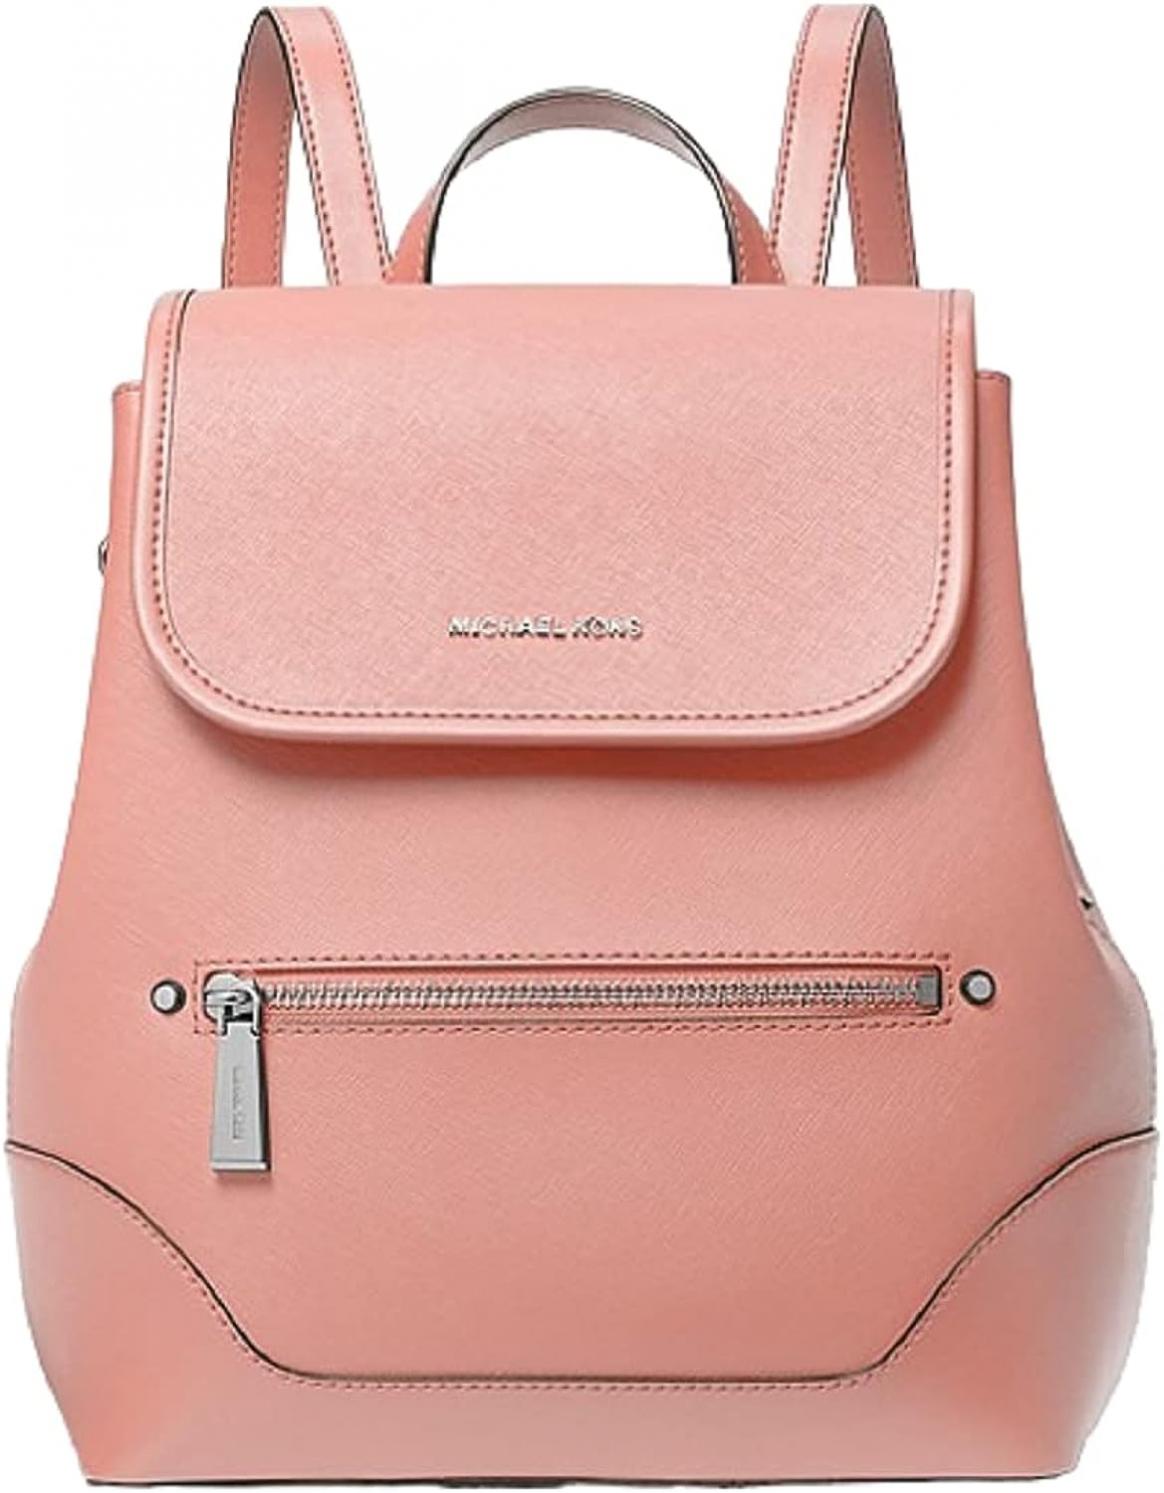 Michael Kors Harrison Medium Saffiano Leather Backpack (Pink)